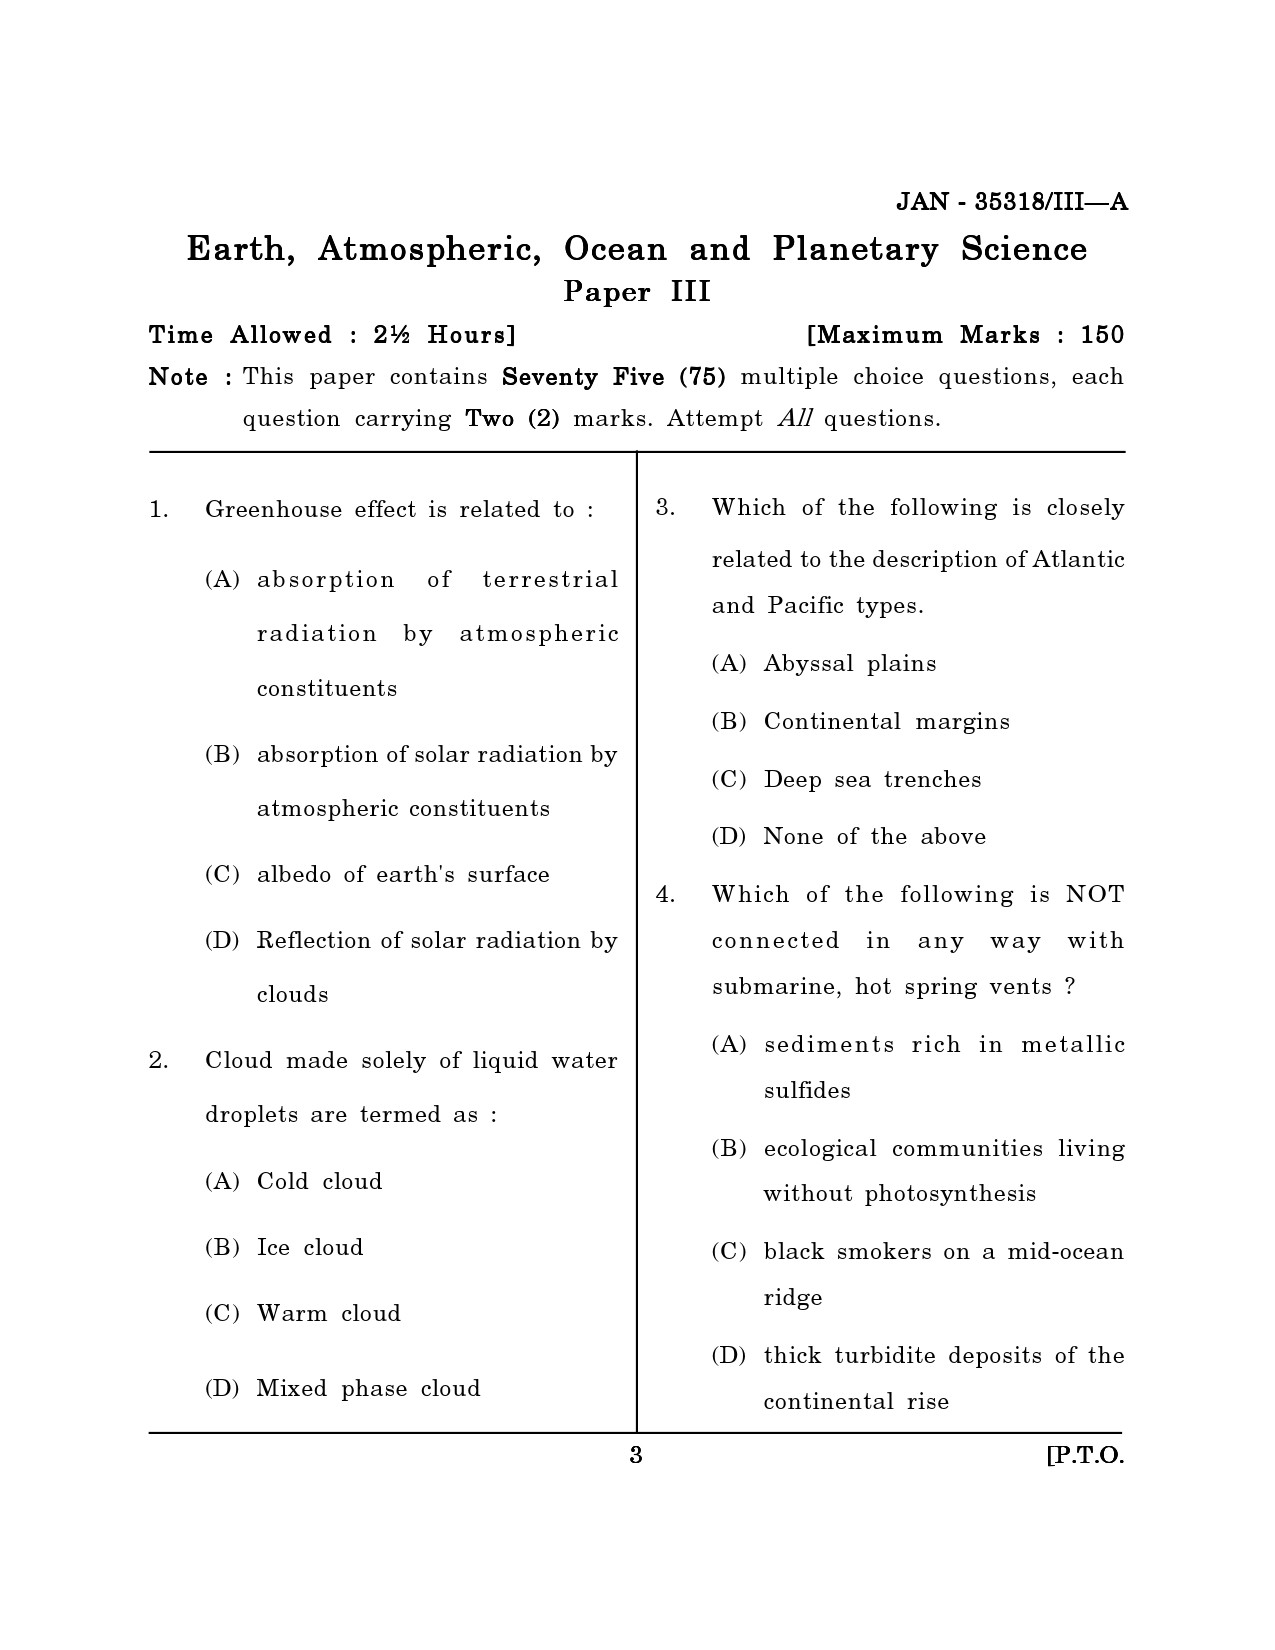 Maharashtra SET Earth Atmospheric Ocean Planetary Science Question Paper III January 2018 2